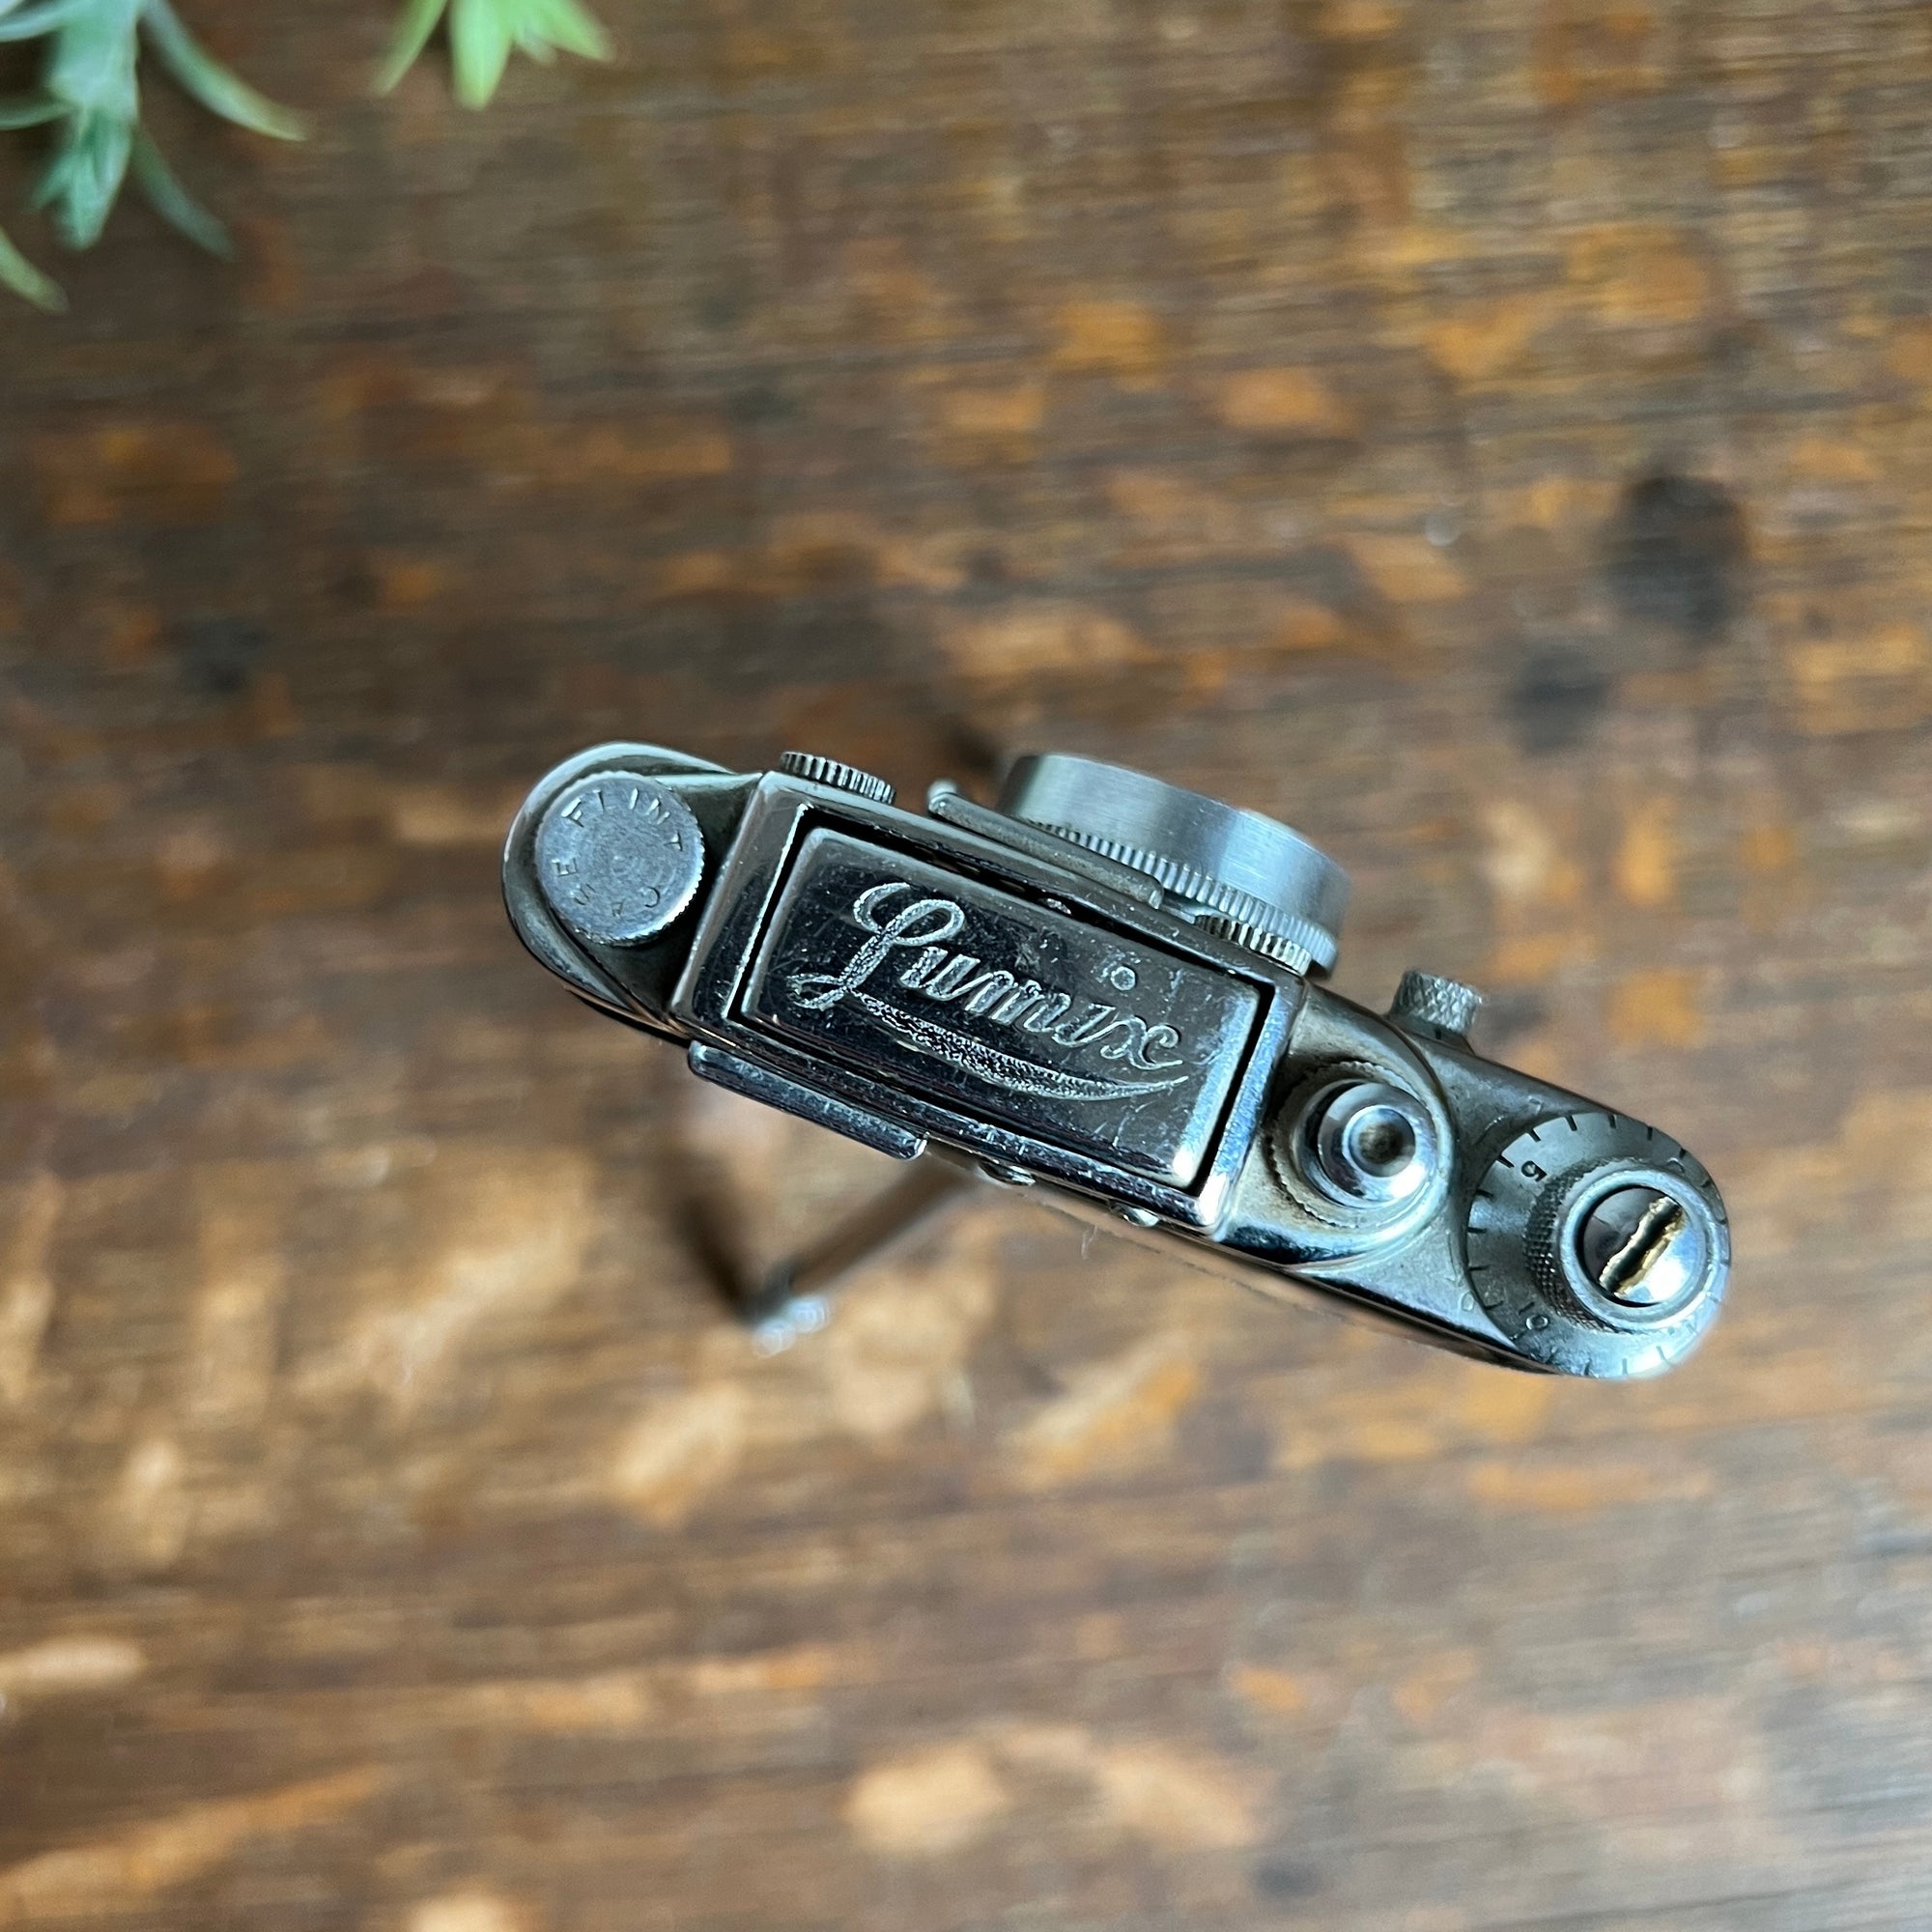 ca 1940s-50s Lumix Camera Lighter - as found